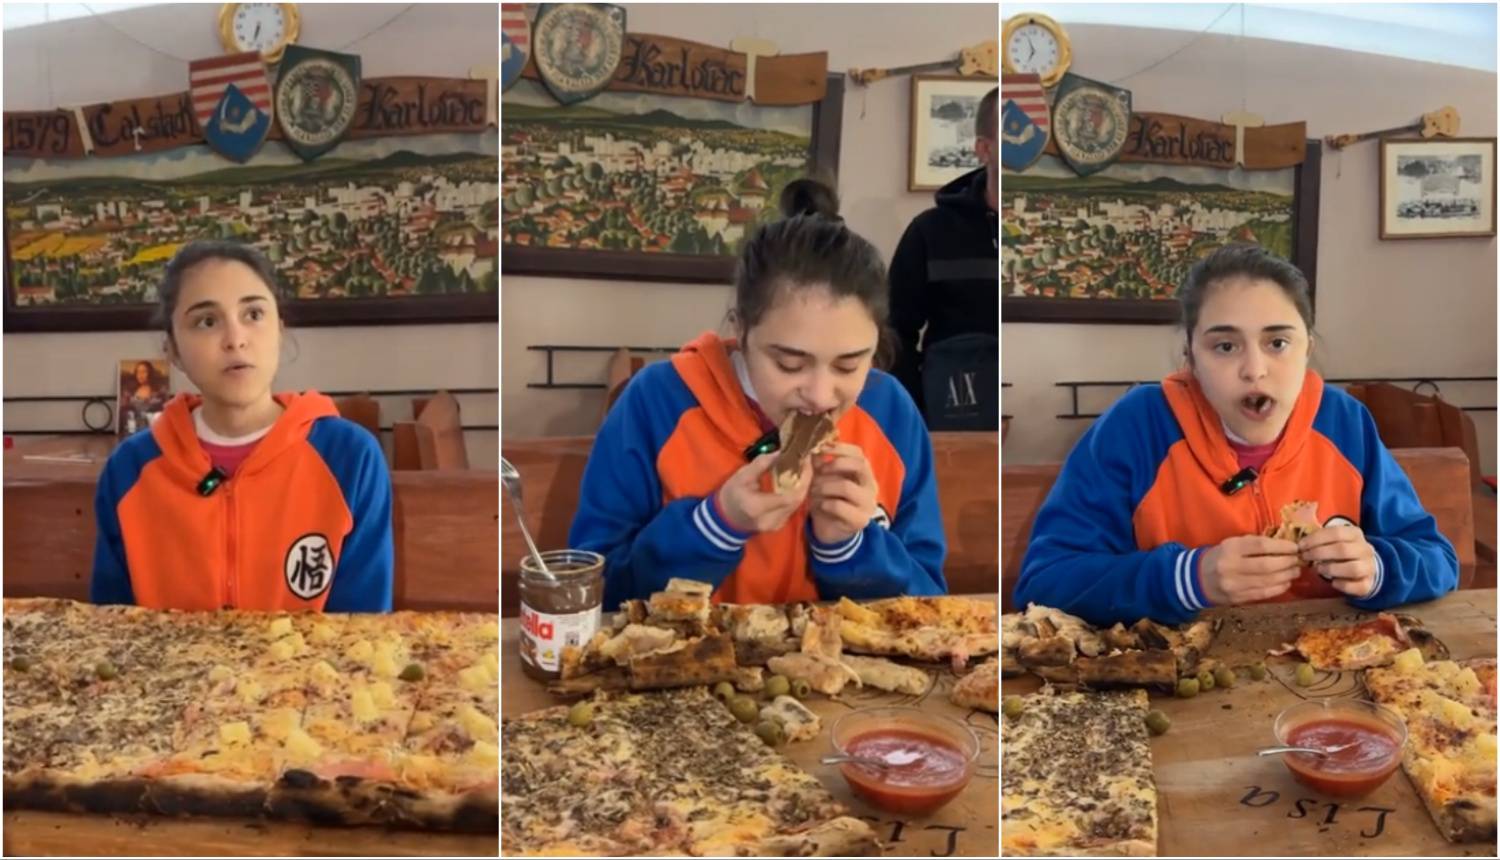 Talijanka Chiara Mangiatutto stigla u Karlovac pojesti pizzu od metra - mazala ju Nutellom!